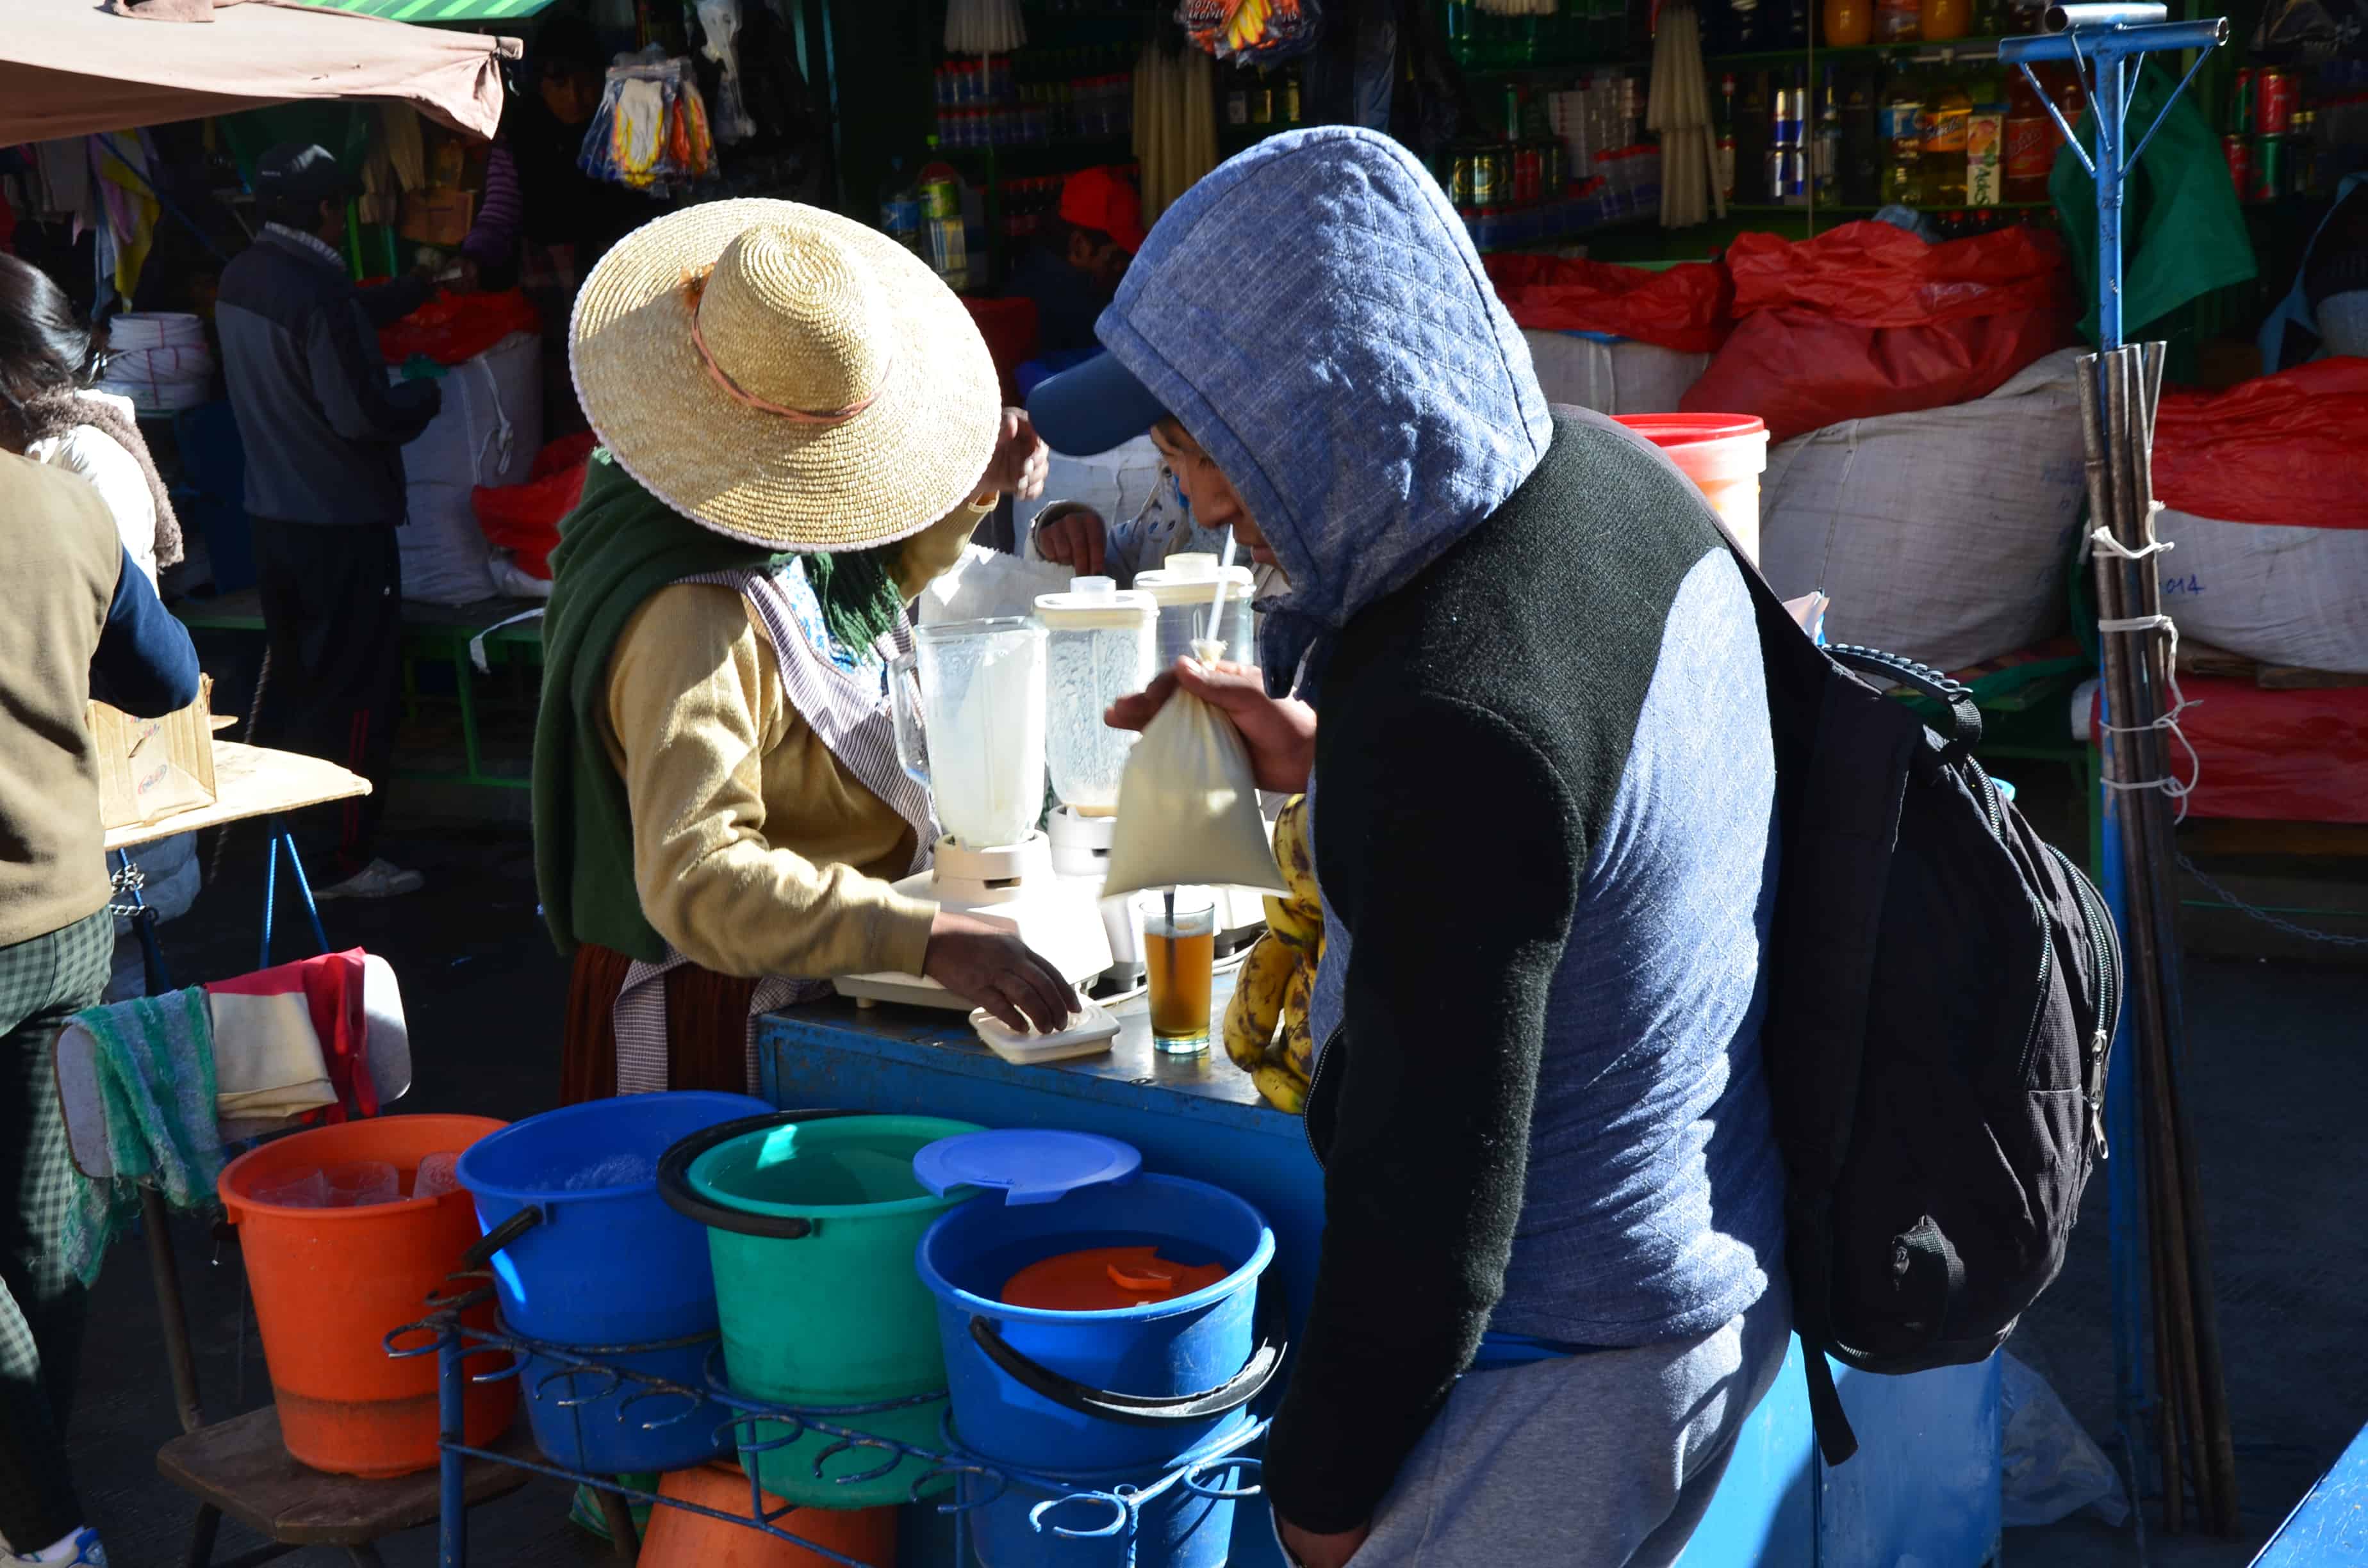 Miner's market in Potosí, Bolivia